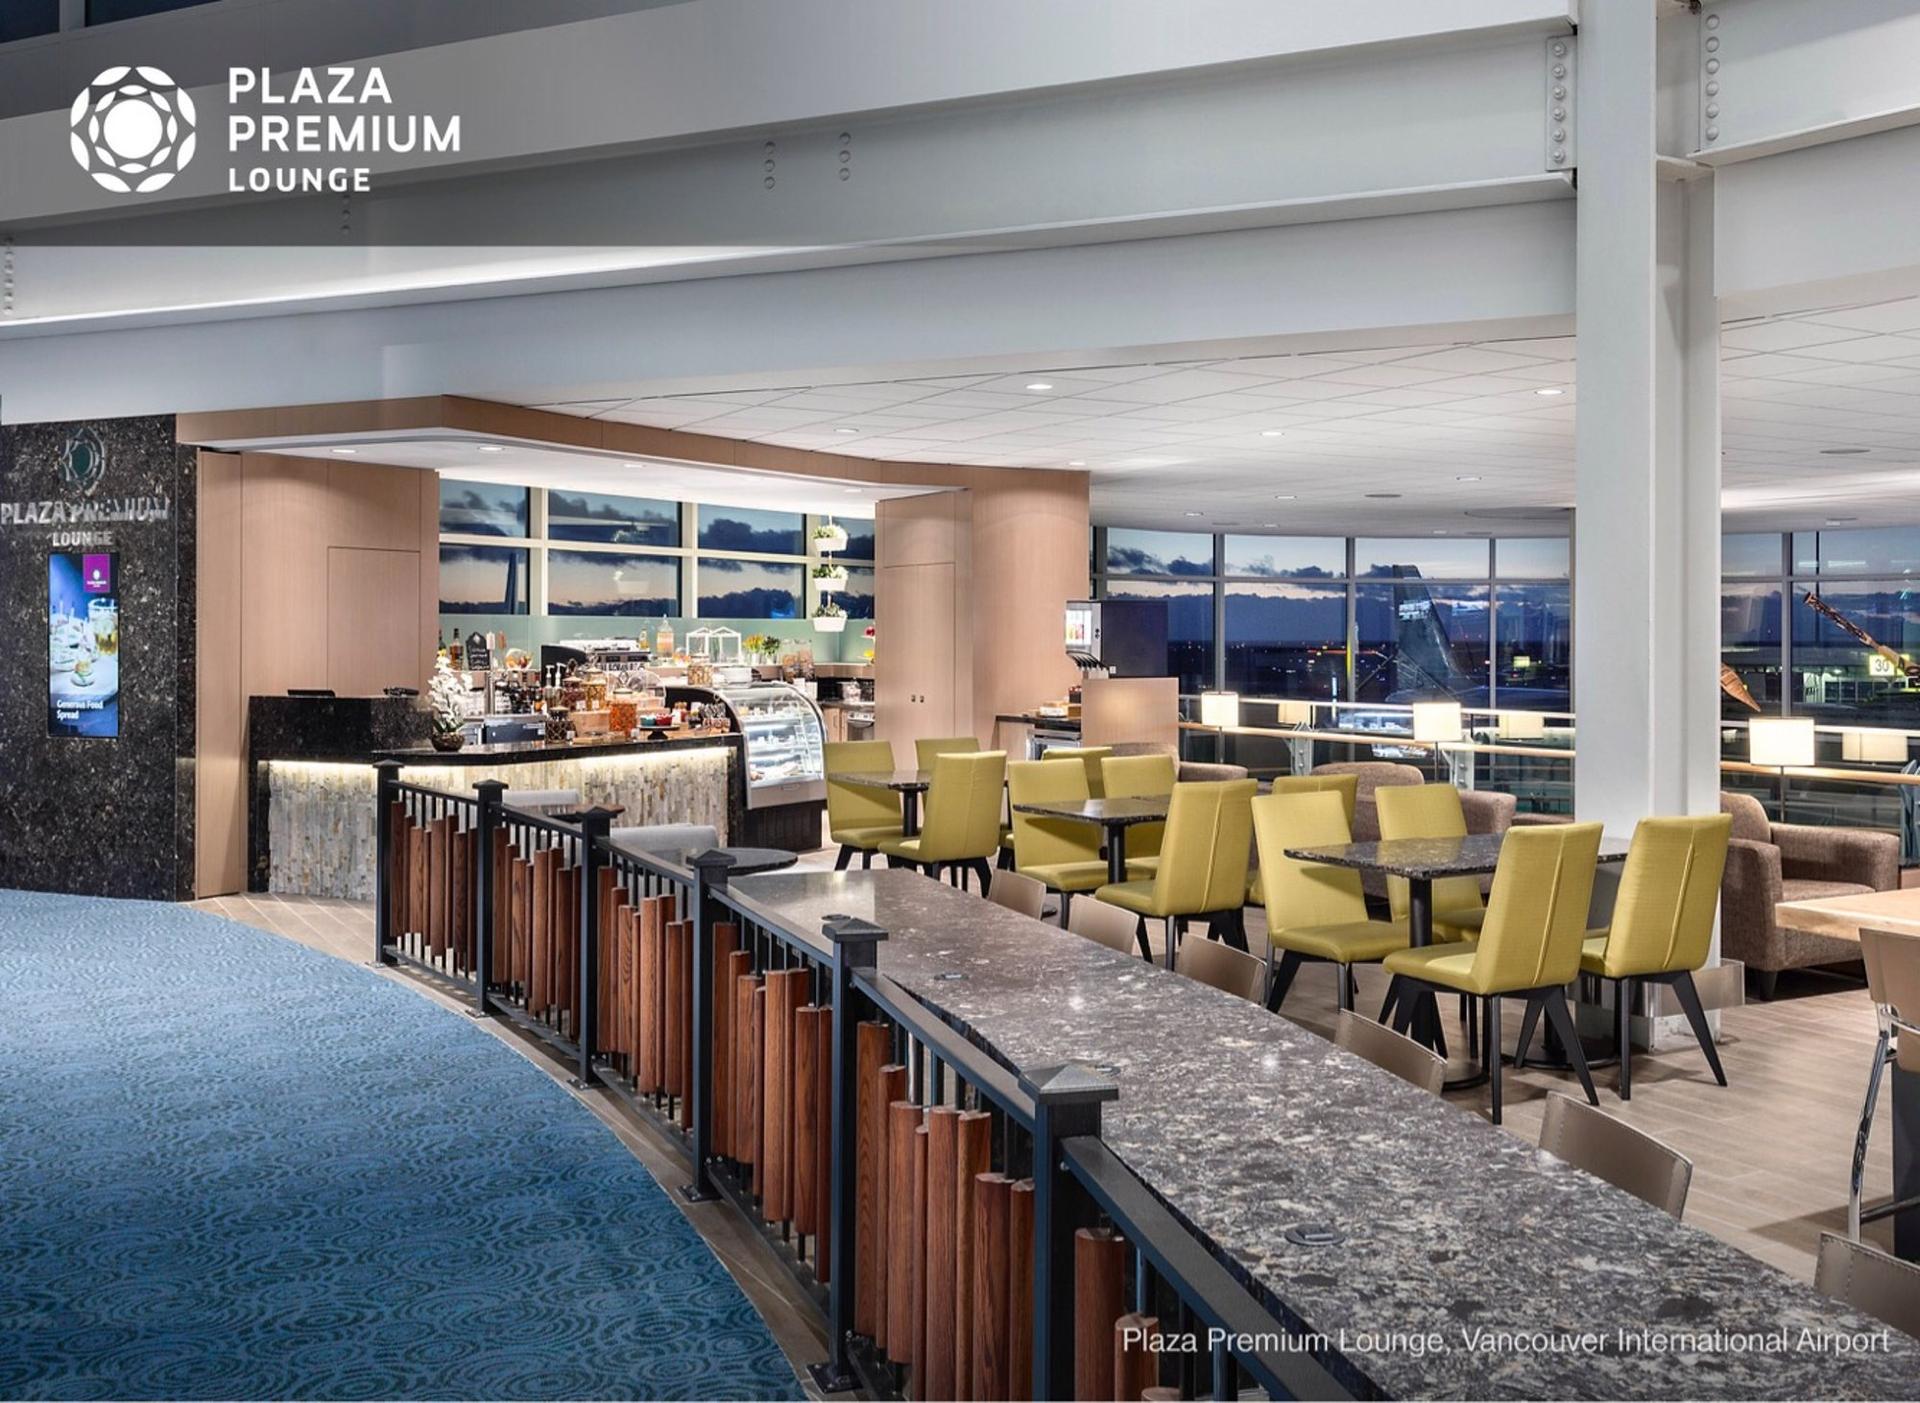 Plaza Premium Lounge (Domestic Gate C29) image 6 of 17